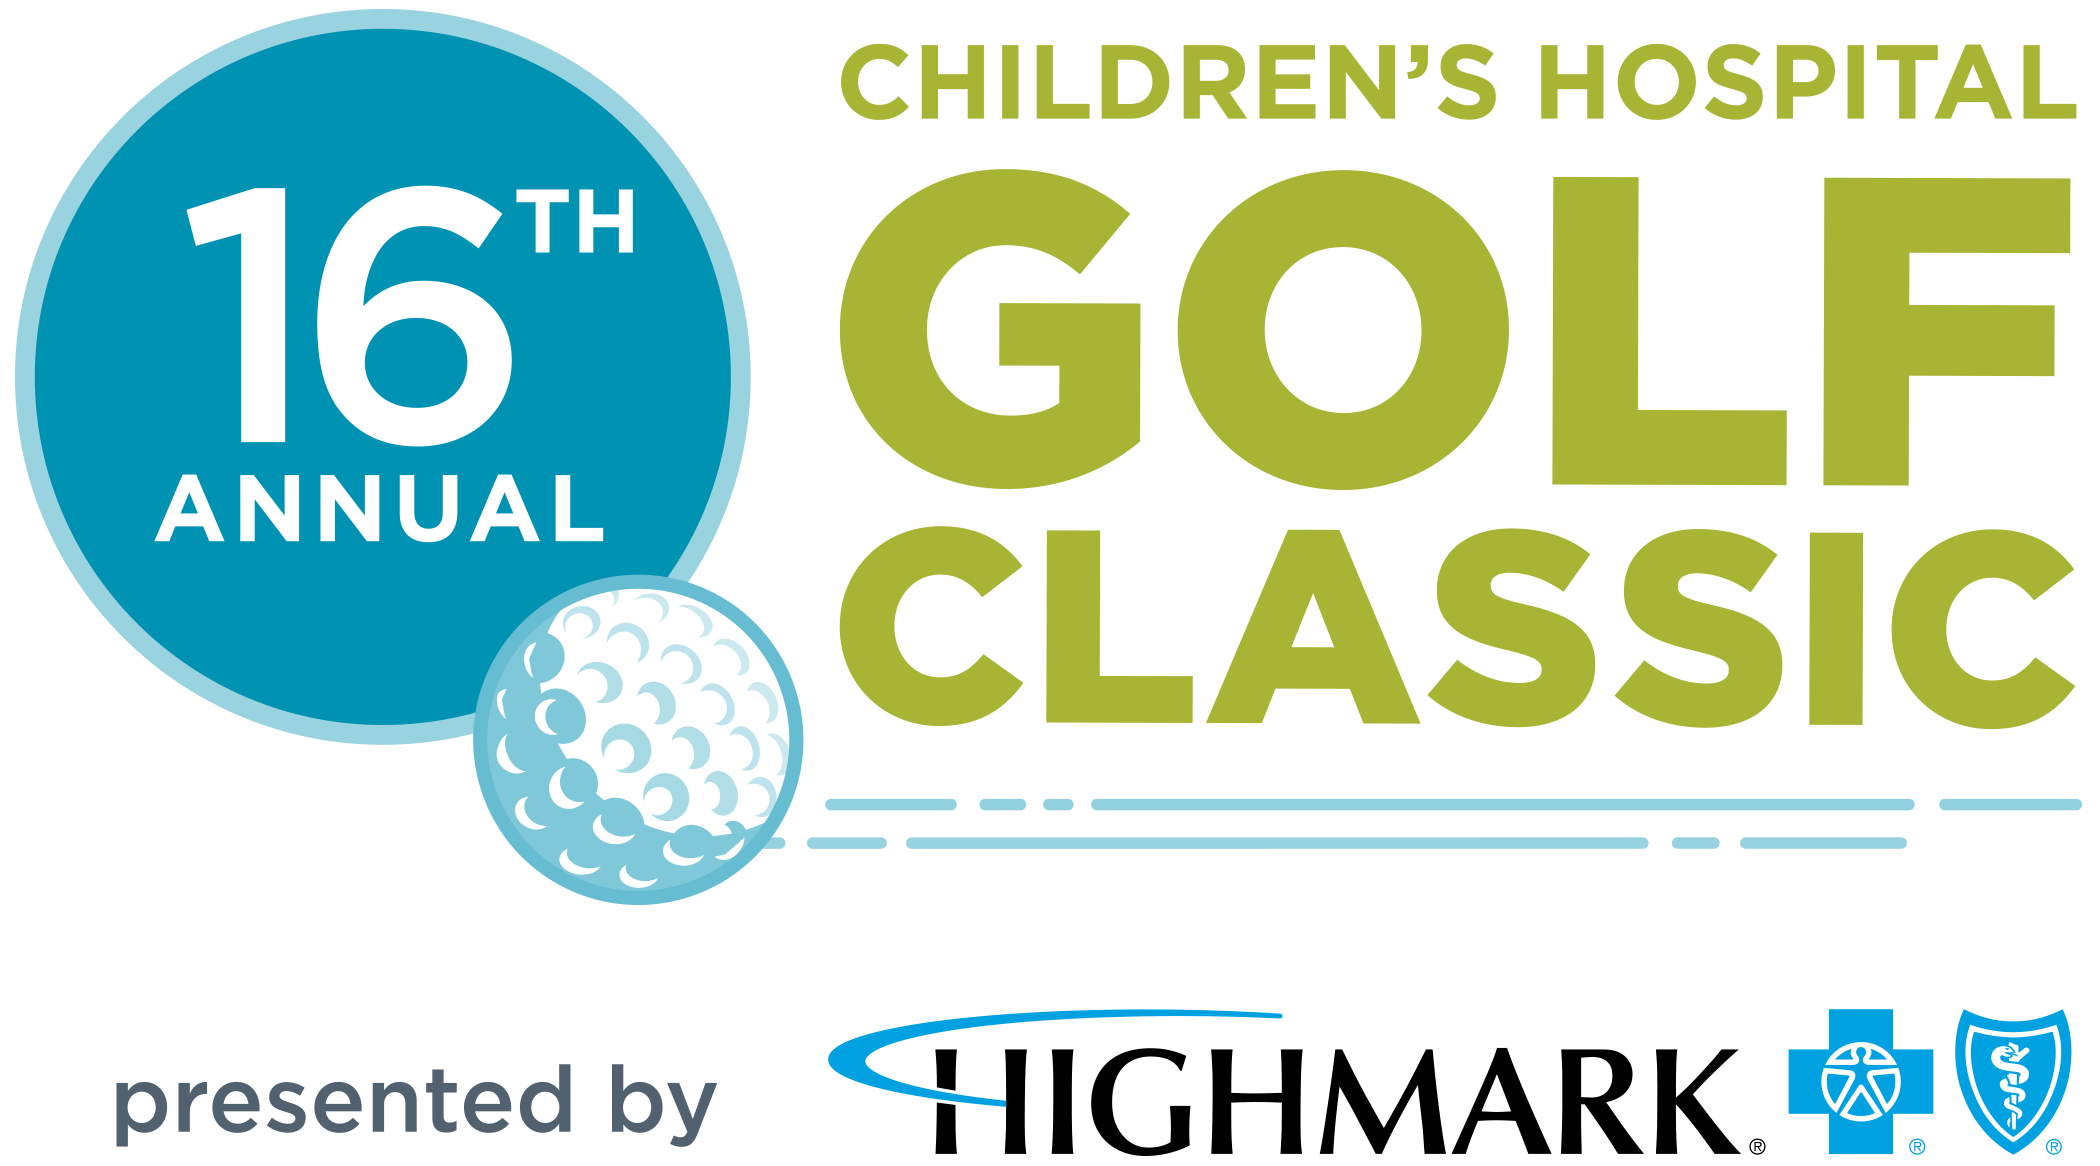 16th annual Children's Hospital Golf Classic